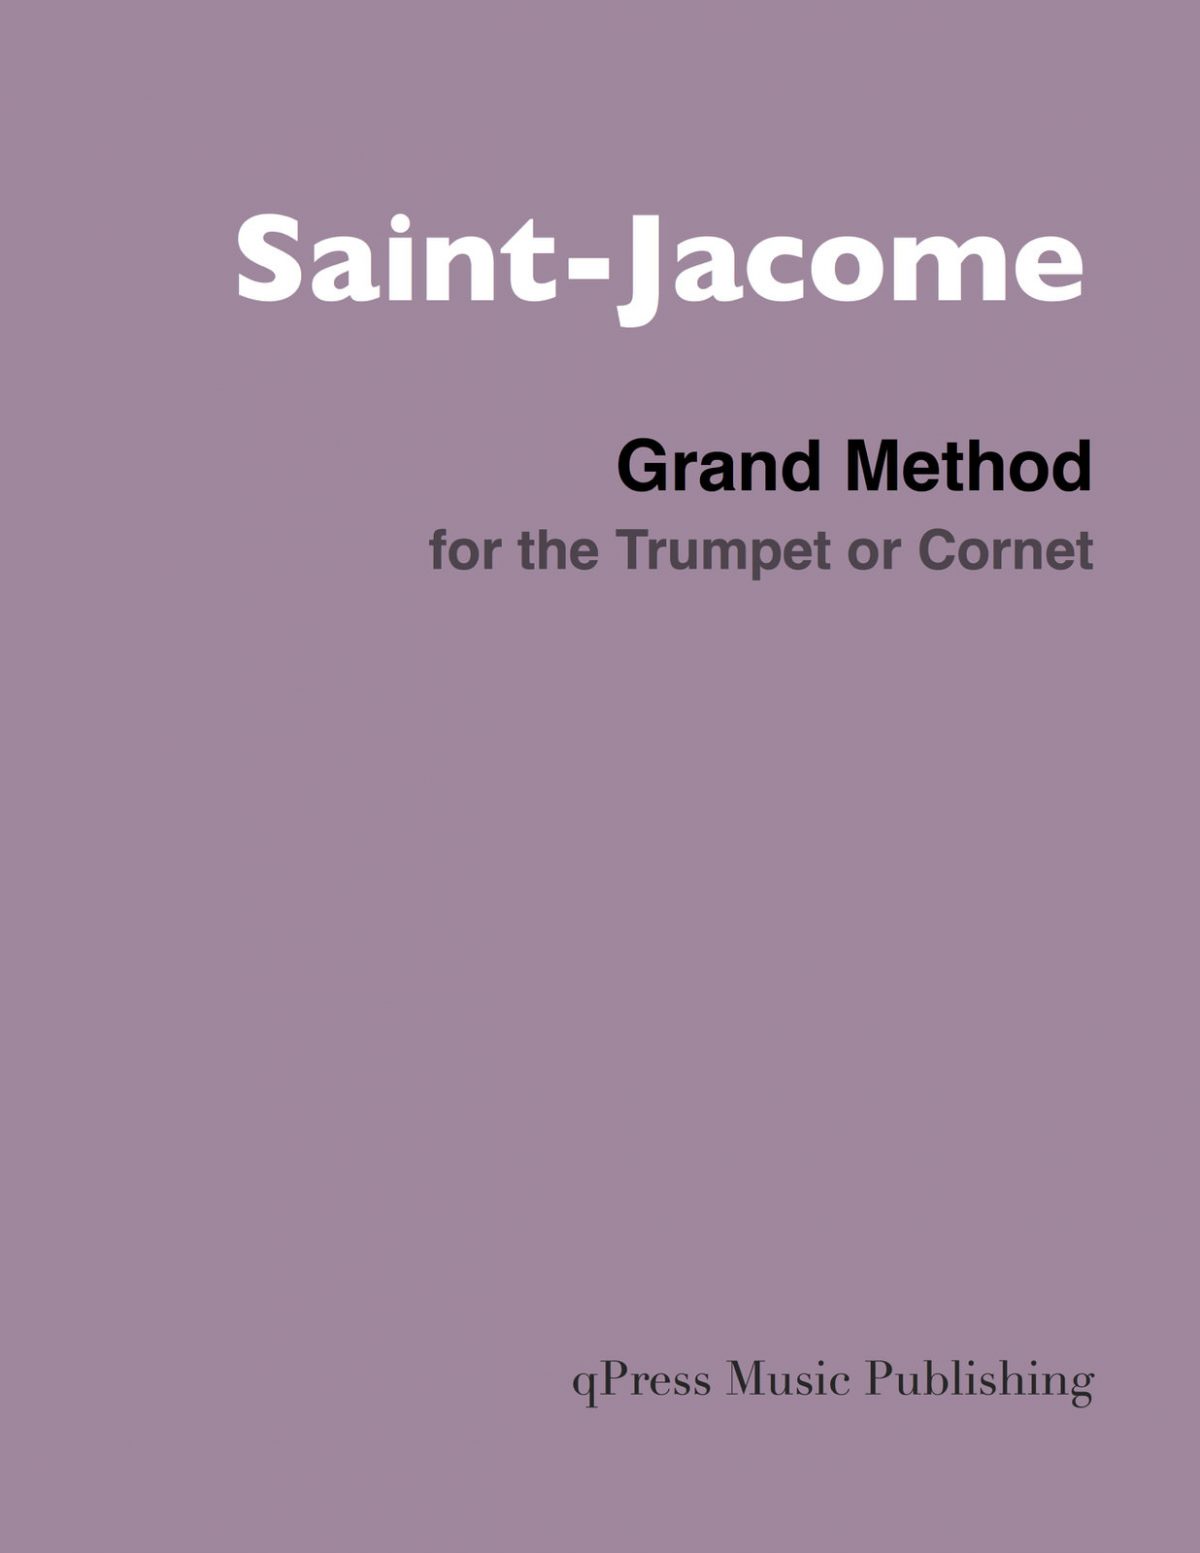 St. Jacome Grand Method